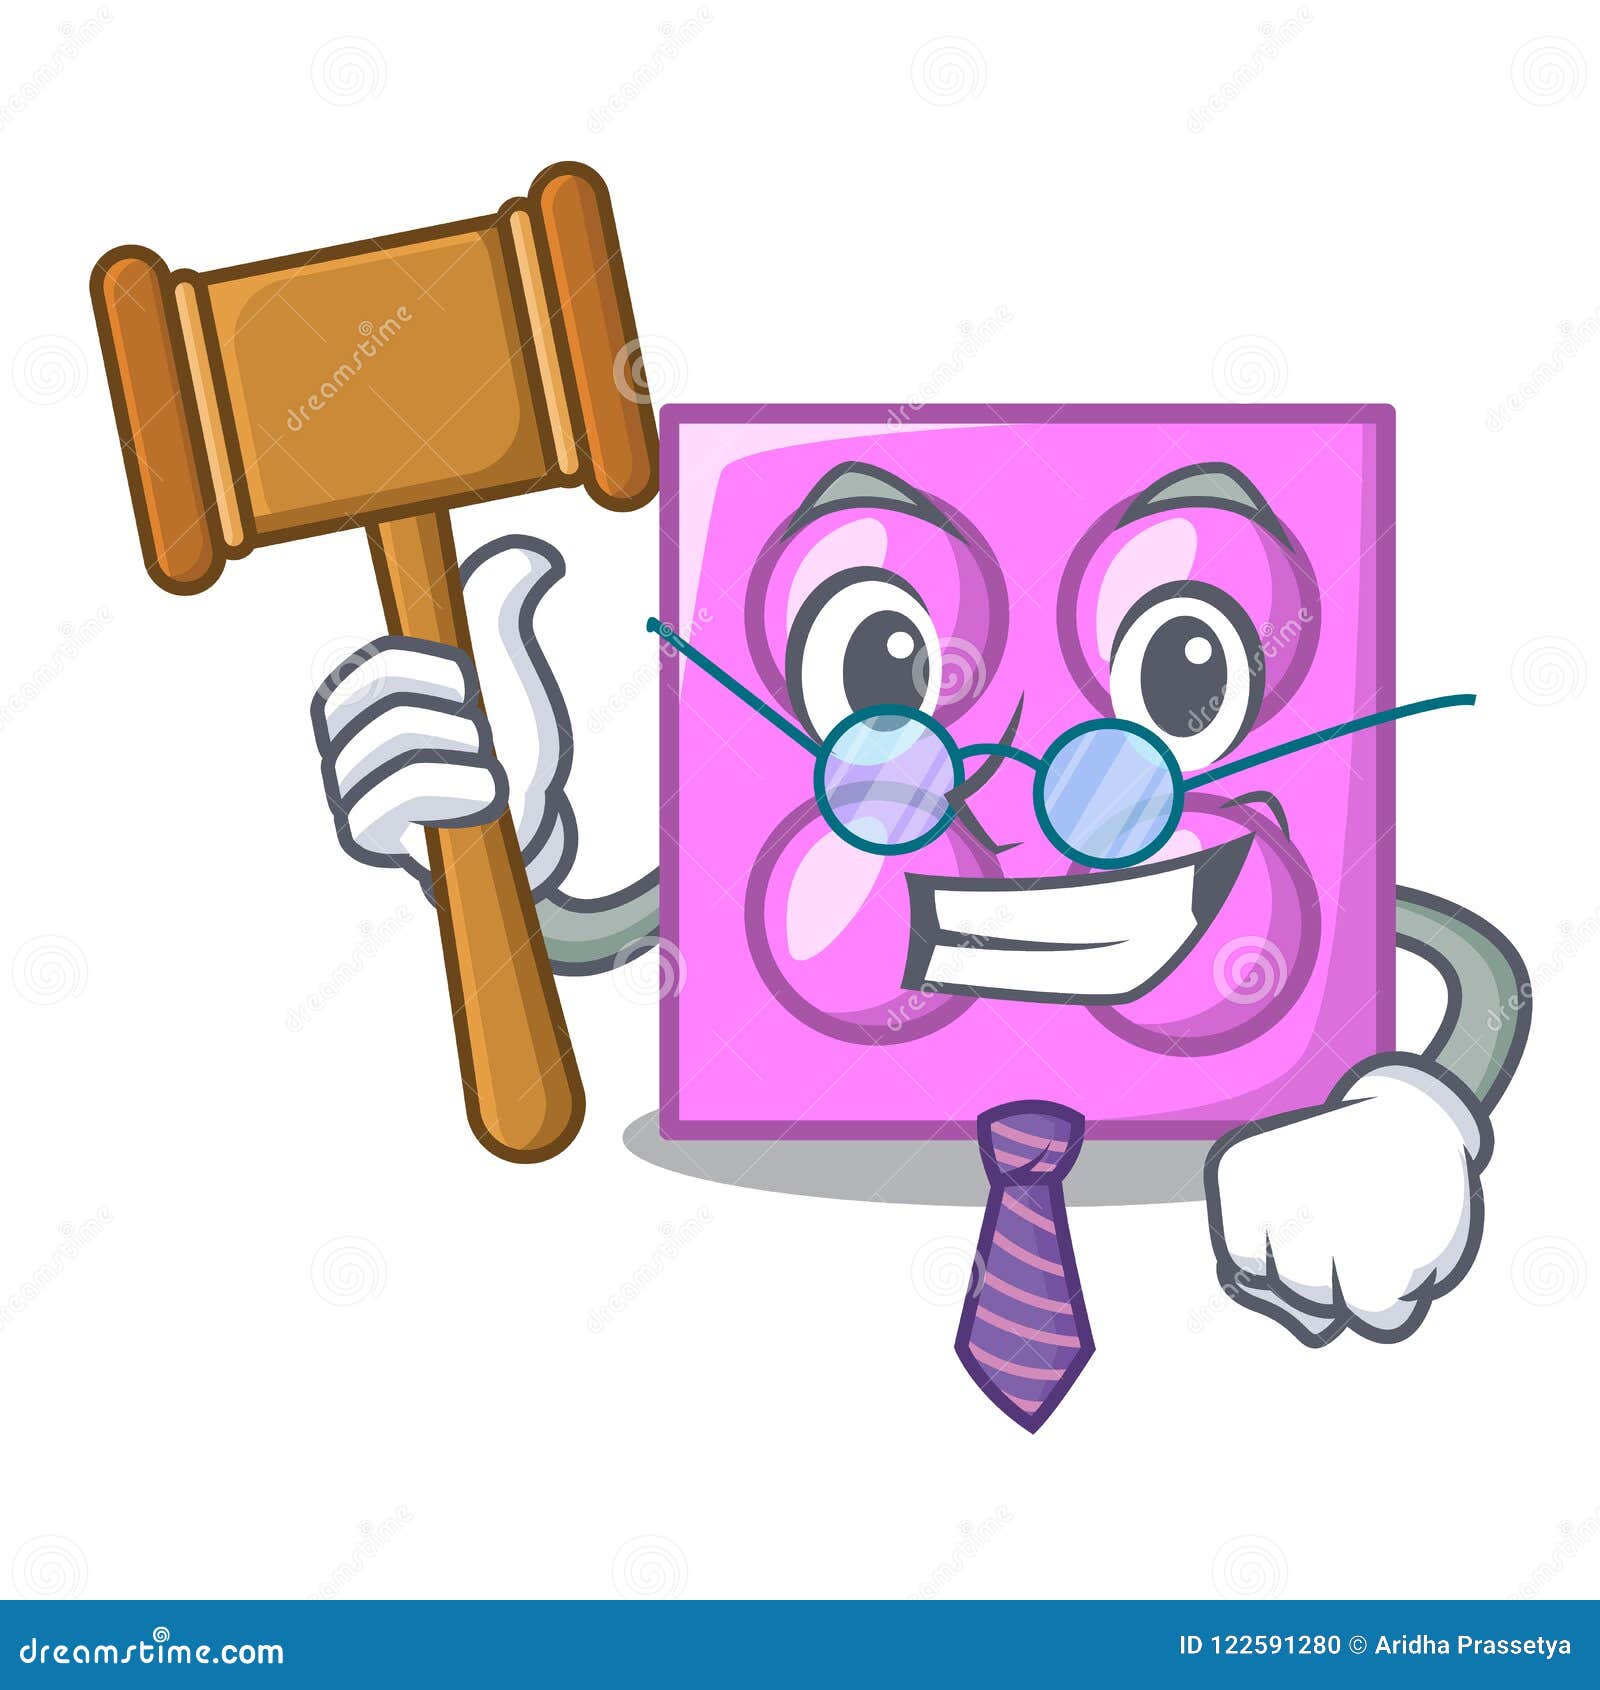 Judge Toy Brick Mascot Cartoon Stock Vector - Illustration of emotion